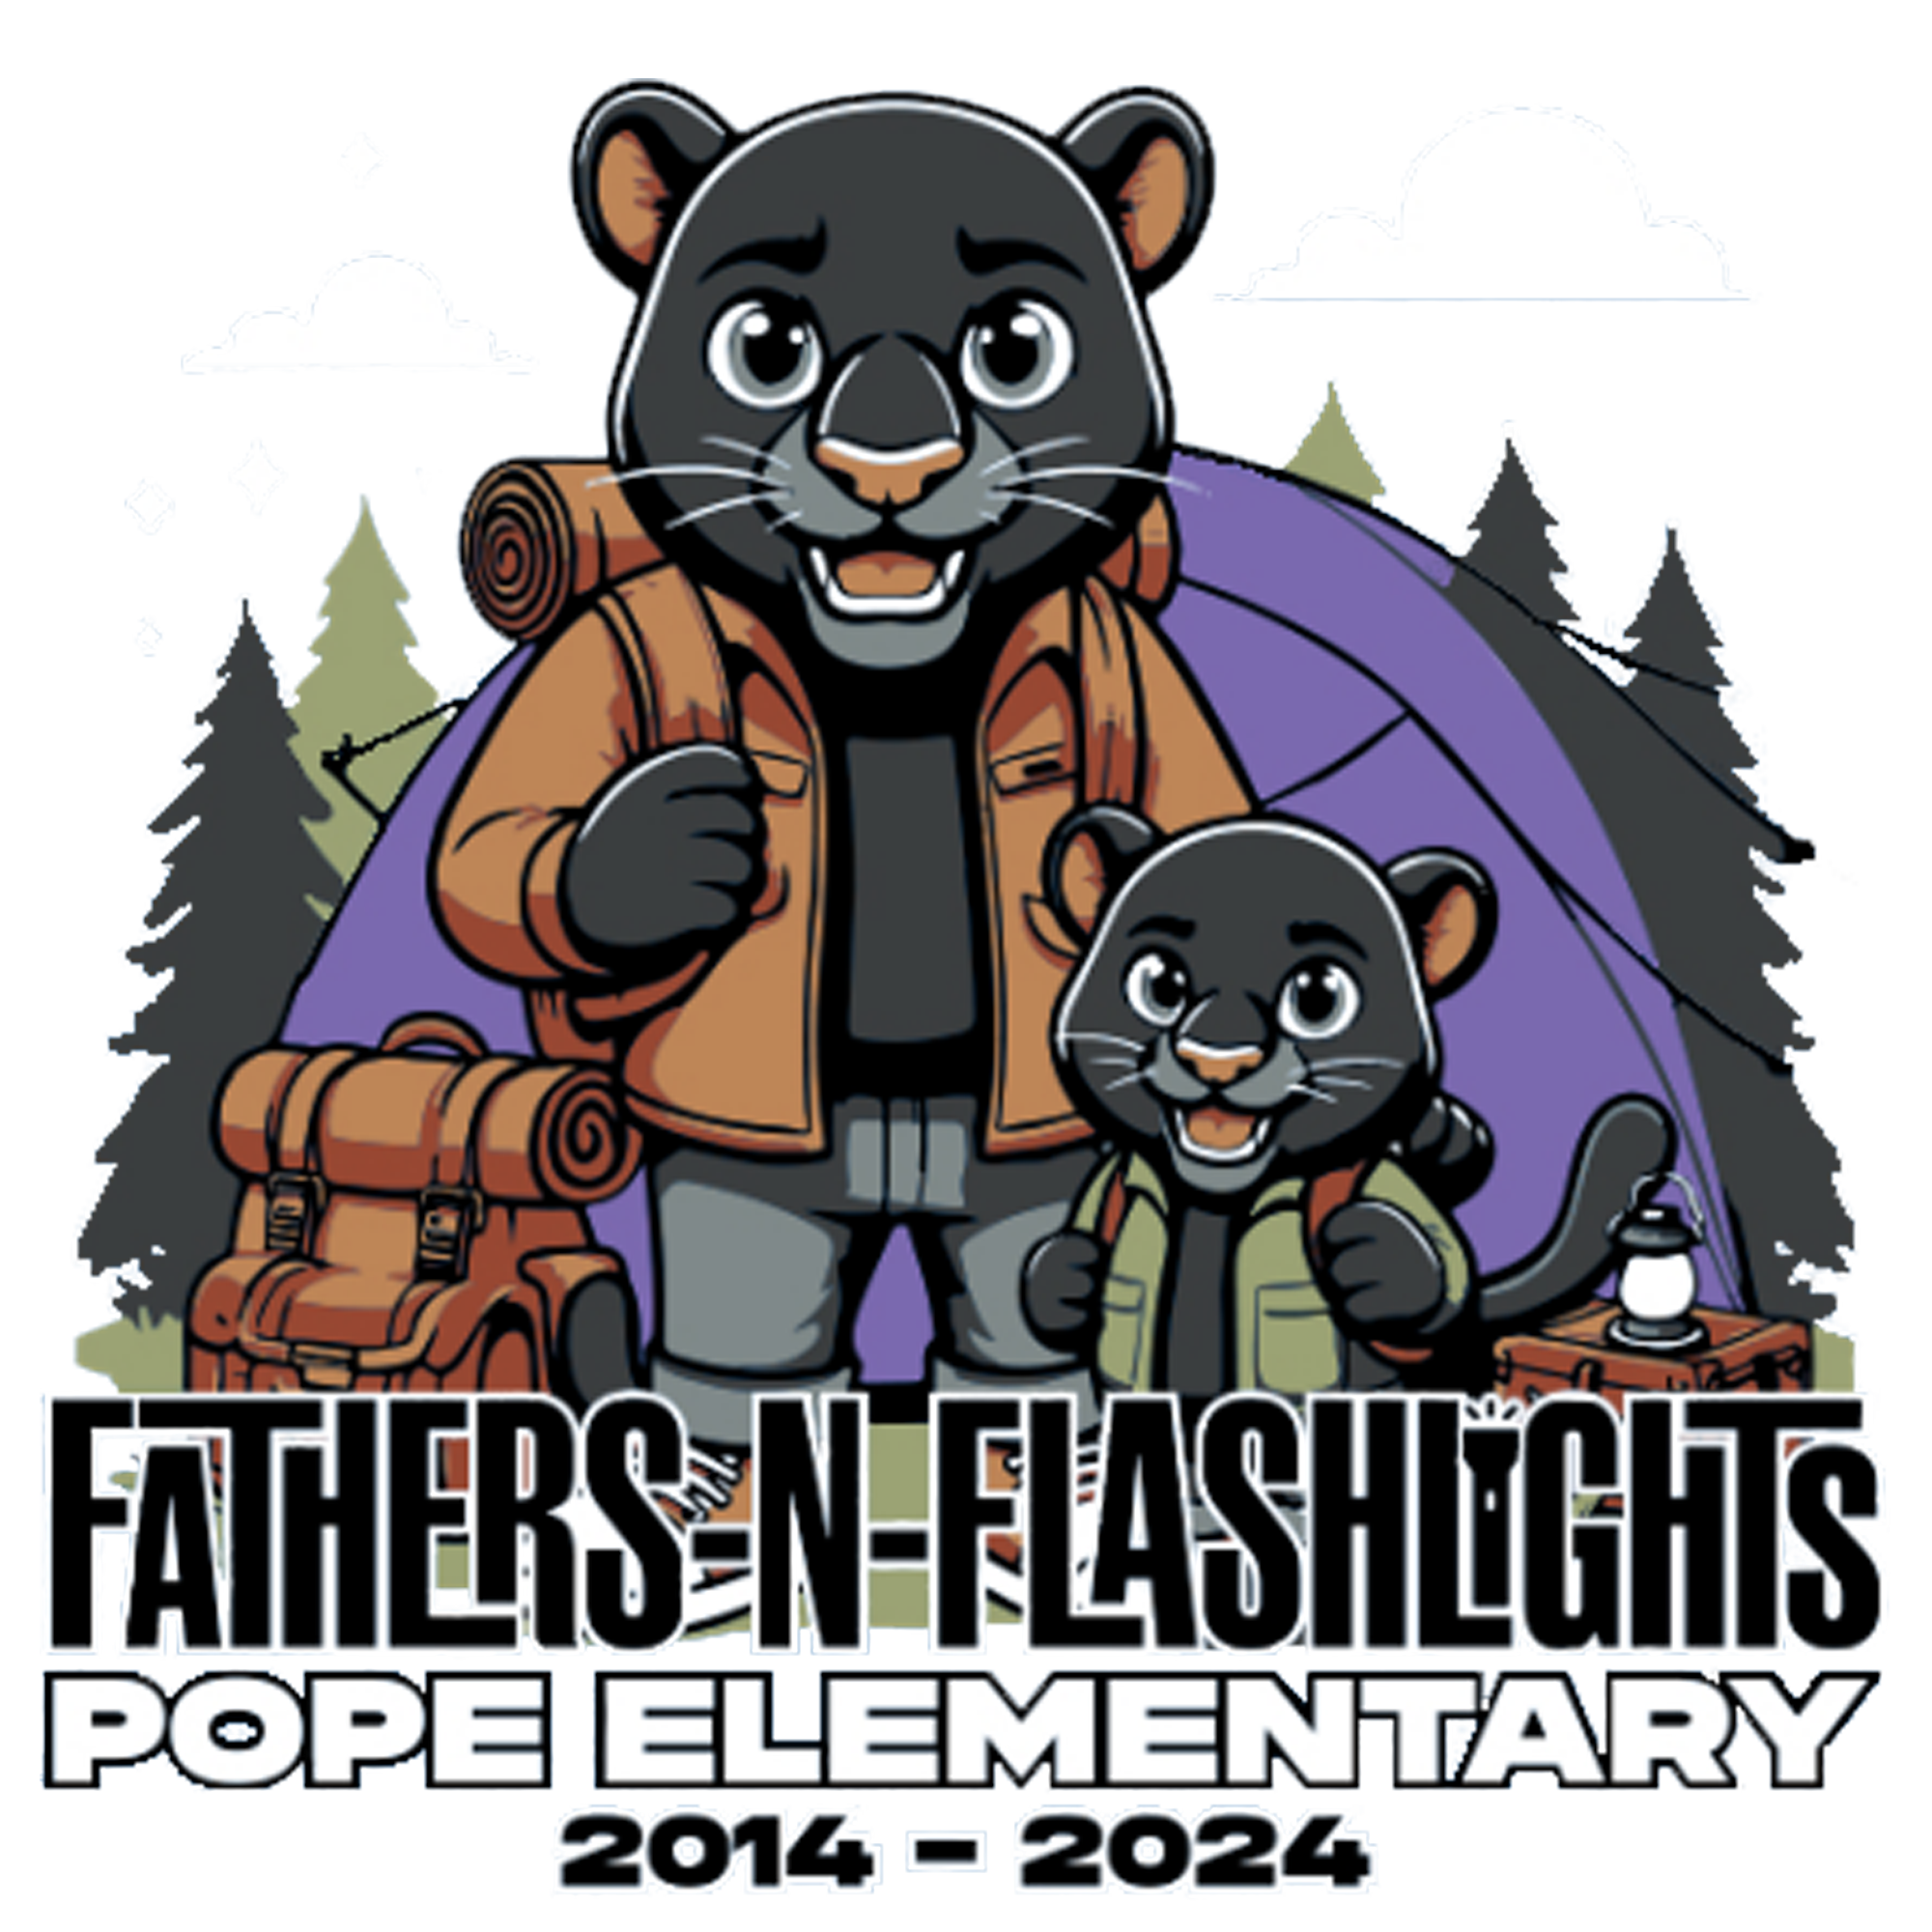 Fathers-N-Flashlights